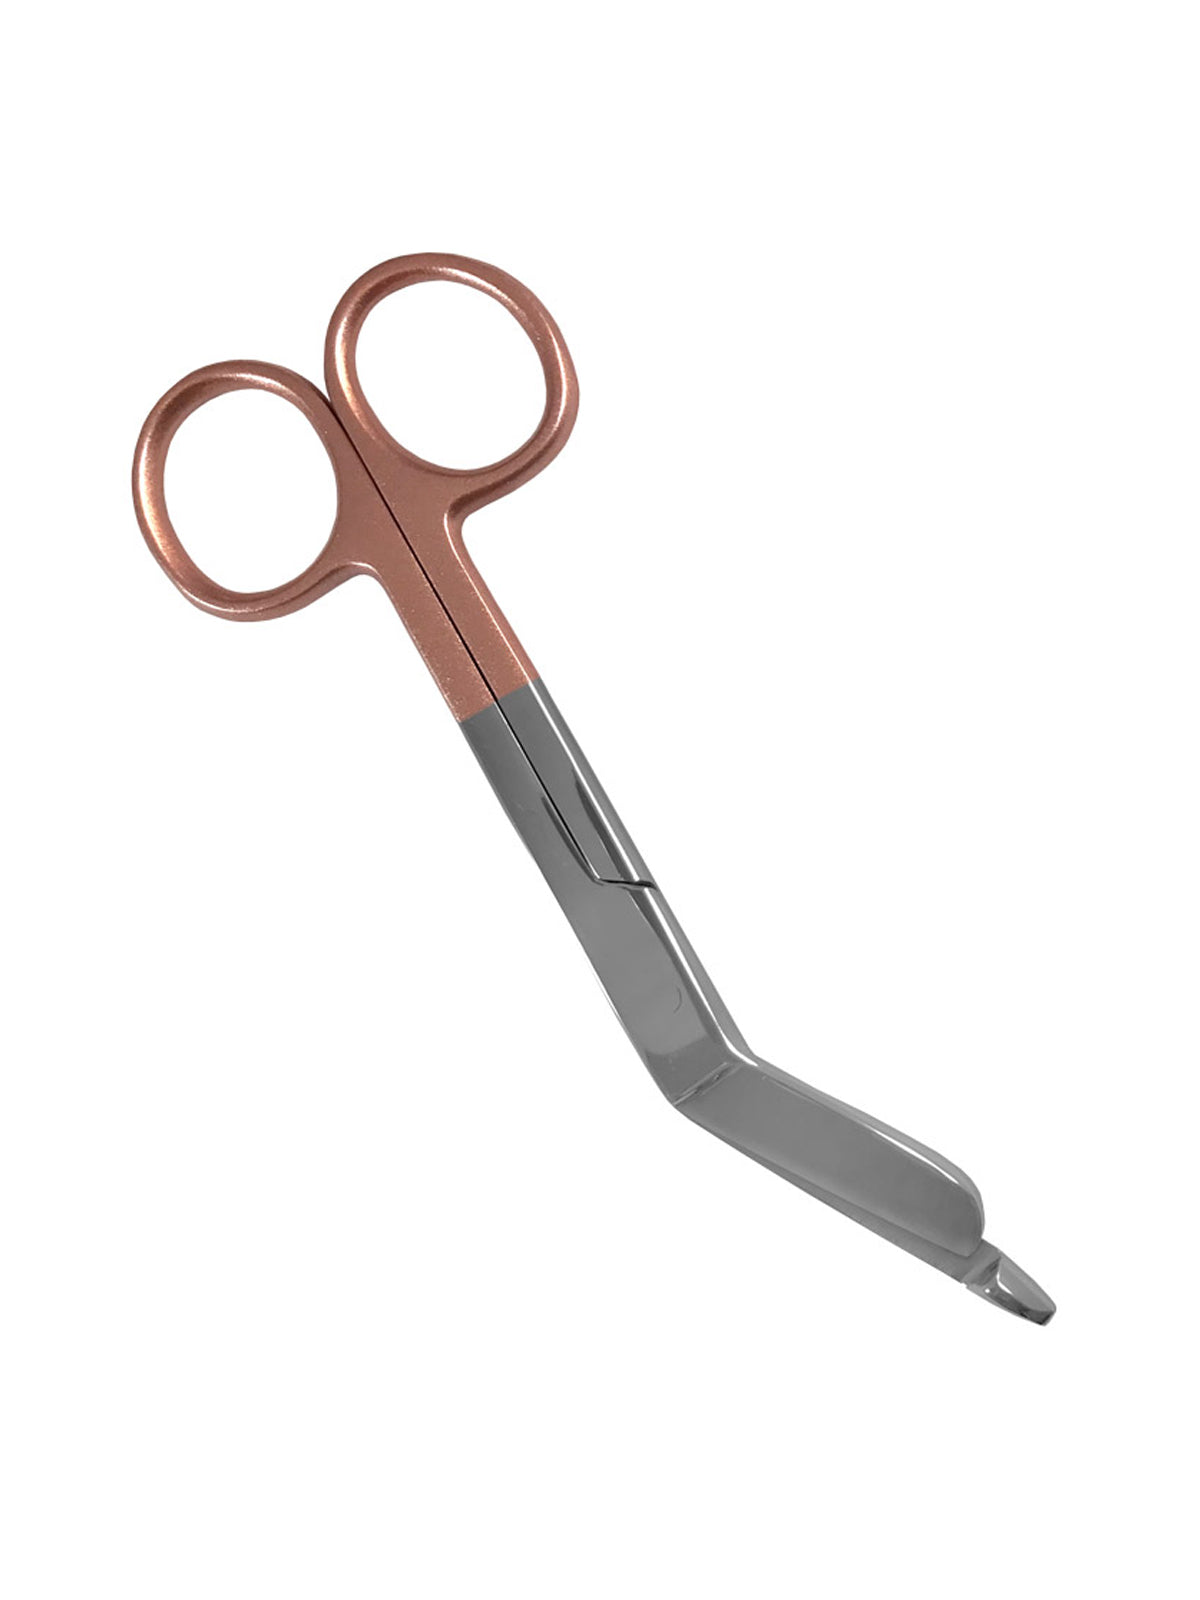 5.5" ColorMate™ Lister Bandage Scissors - 875 - Rose Gold